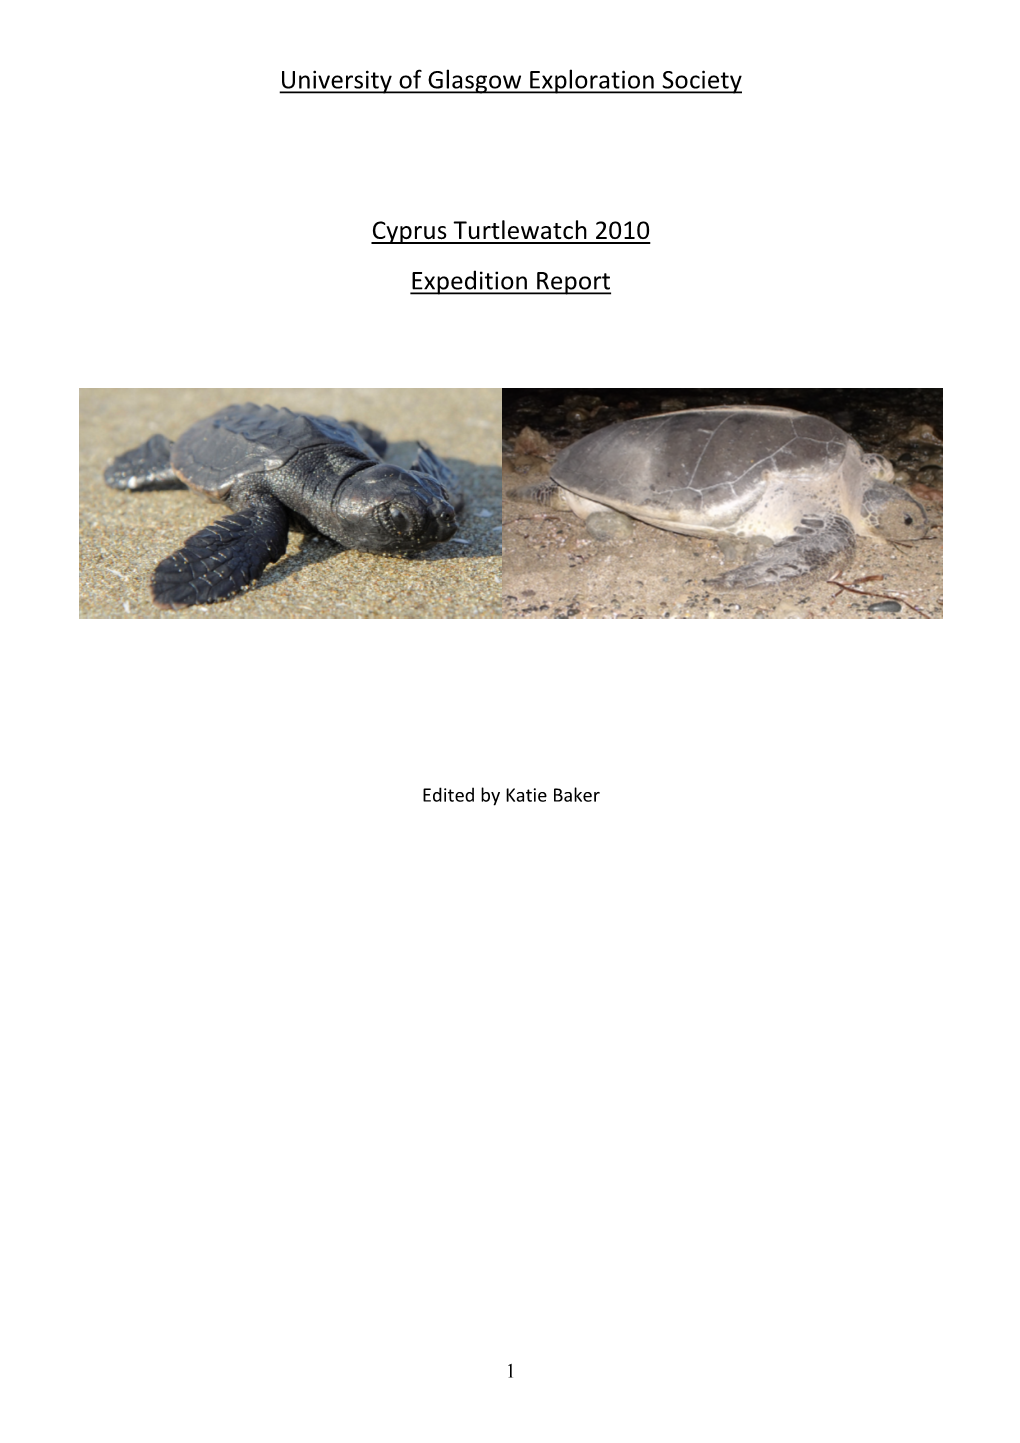 University of Glasgow Exploration Society Cyprus Turtlewatch 2010